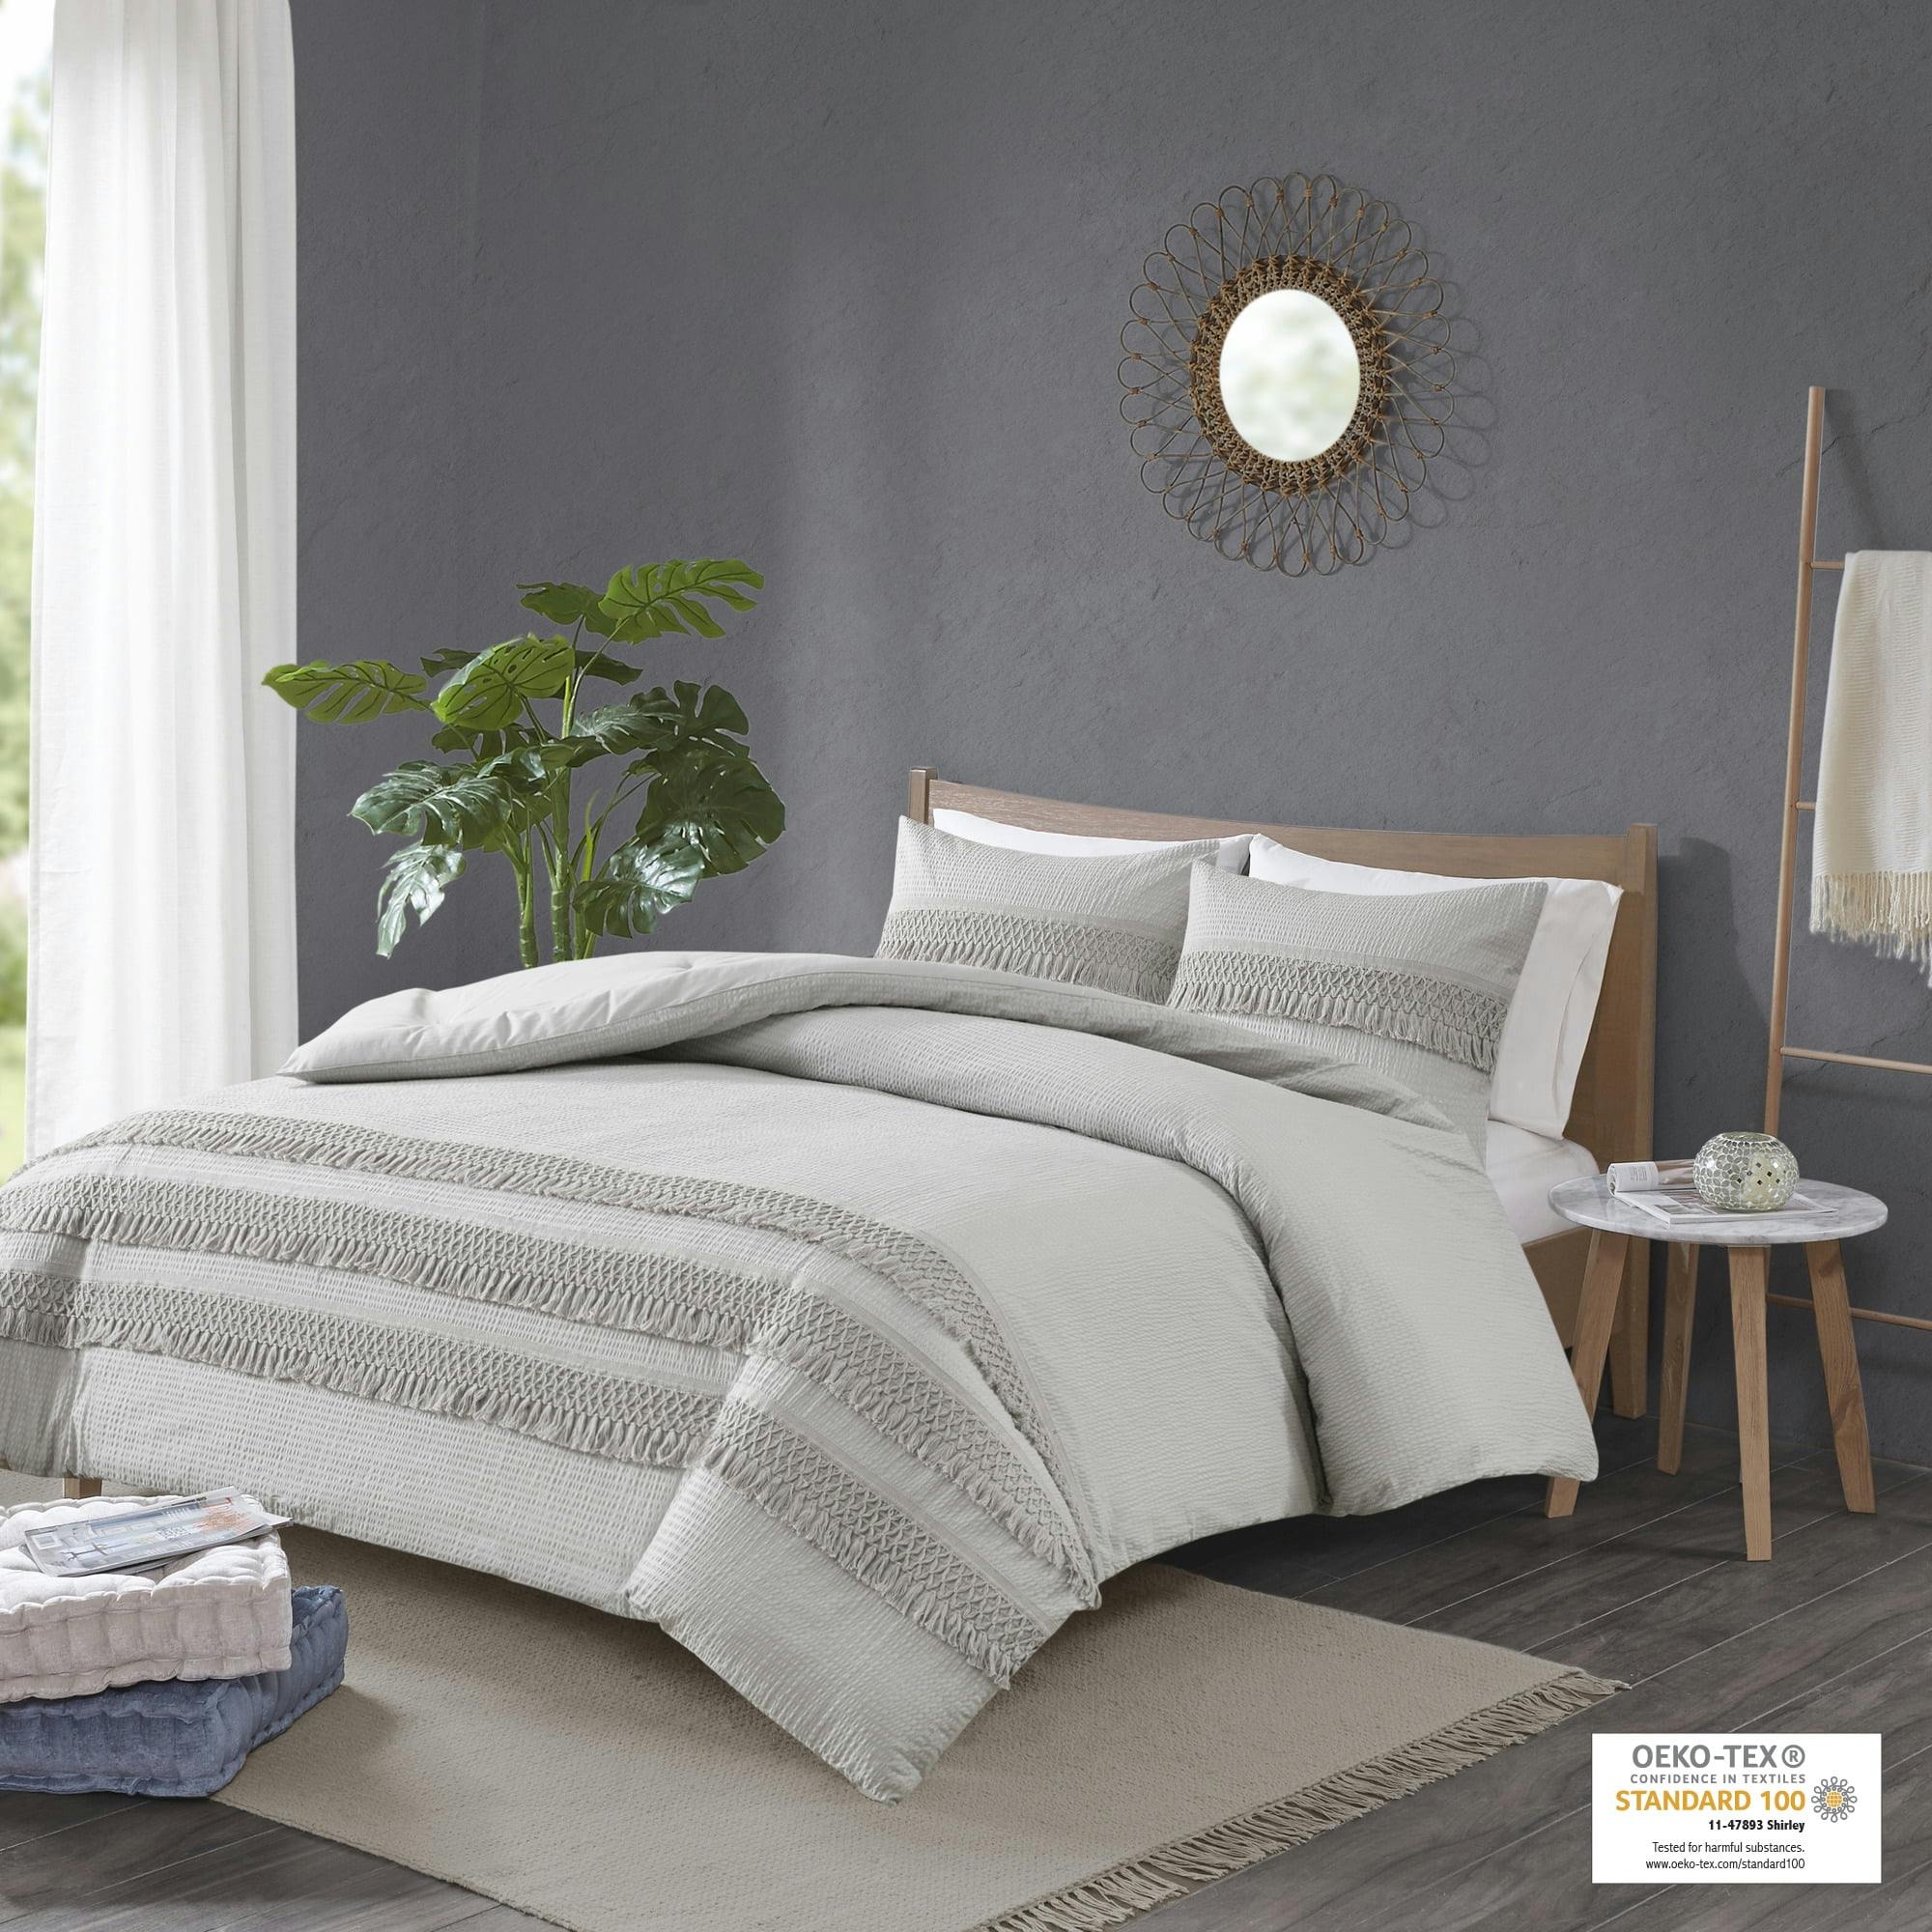 King-Sized Gray Cotton Seersucker Comforter Set with Tassel Trims